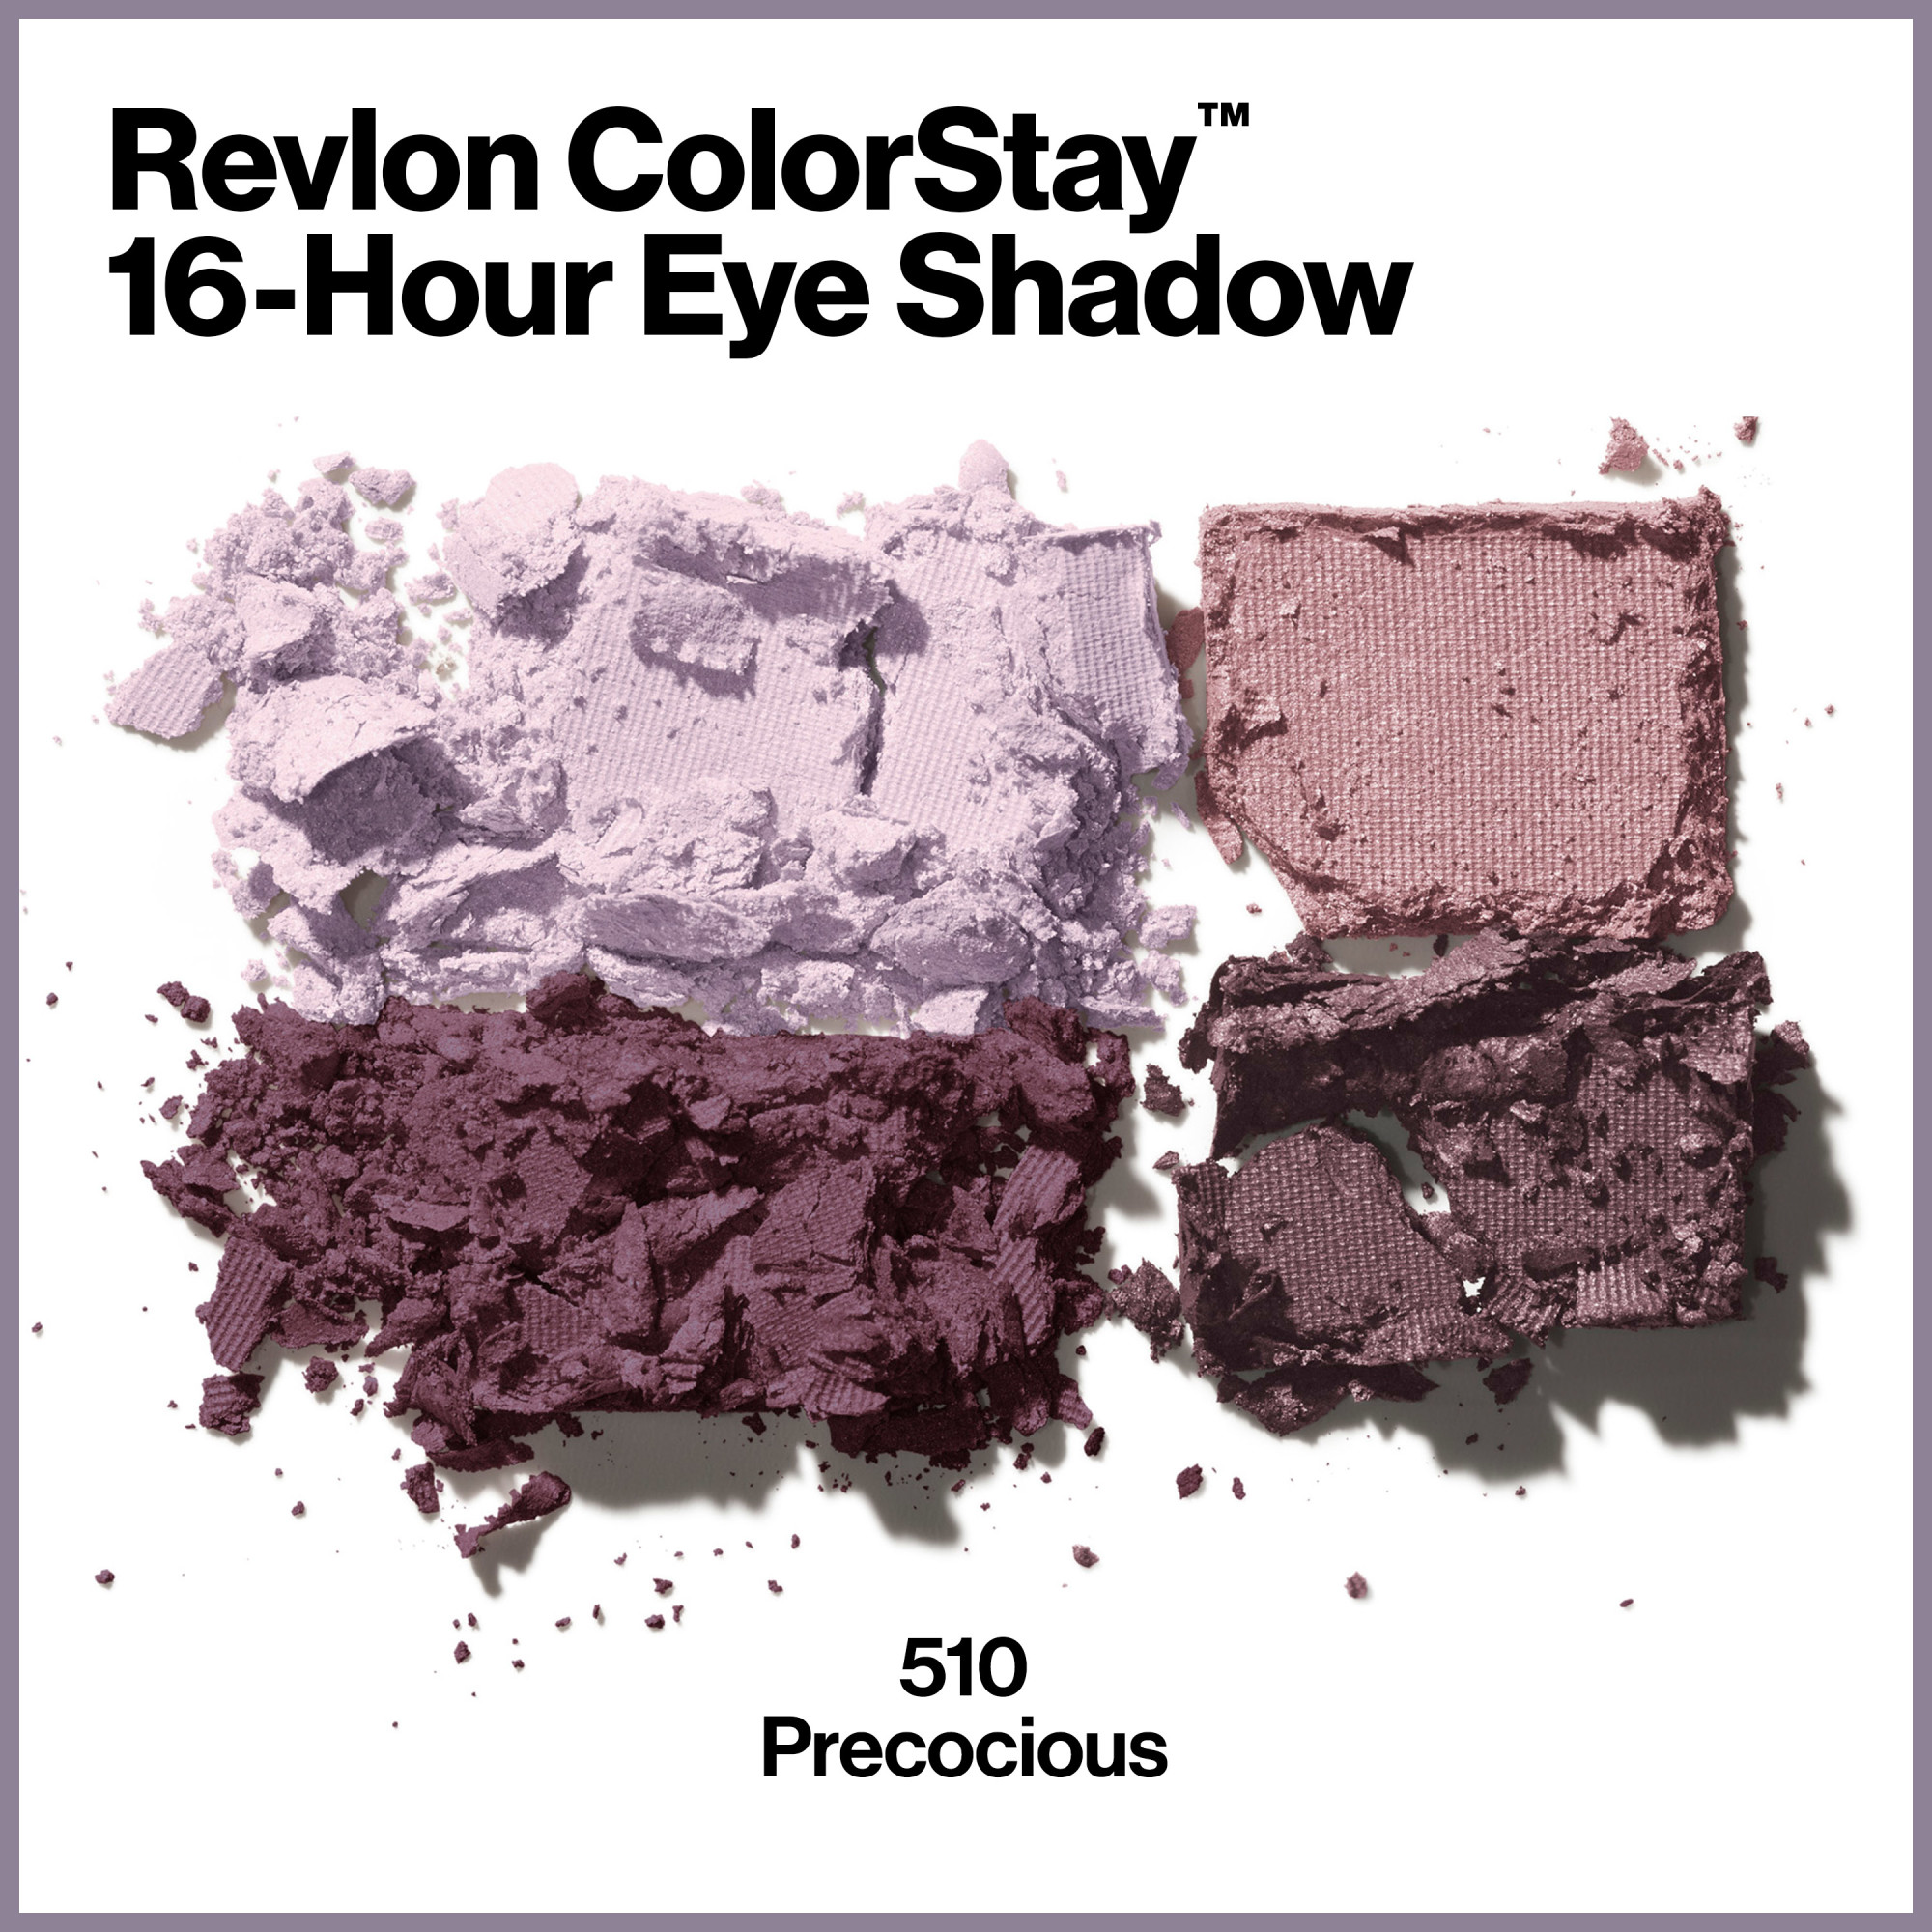 Revlon ColorStay 16-Hour Eye Shadow, 510 Precocious, 0.16 oz - image 5 of 7